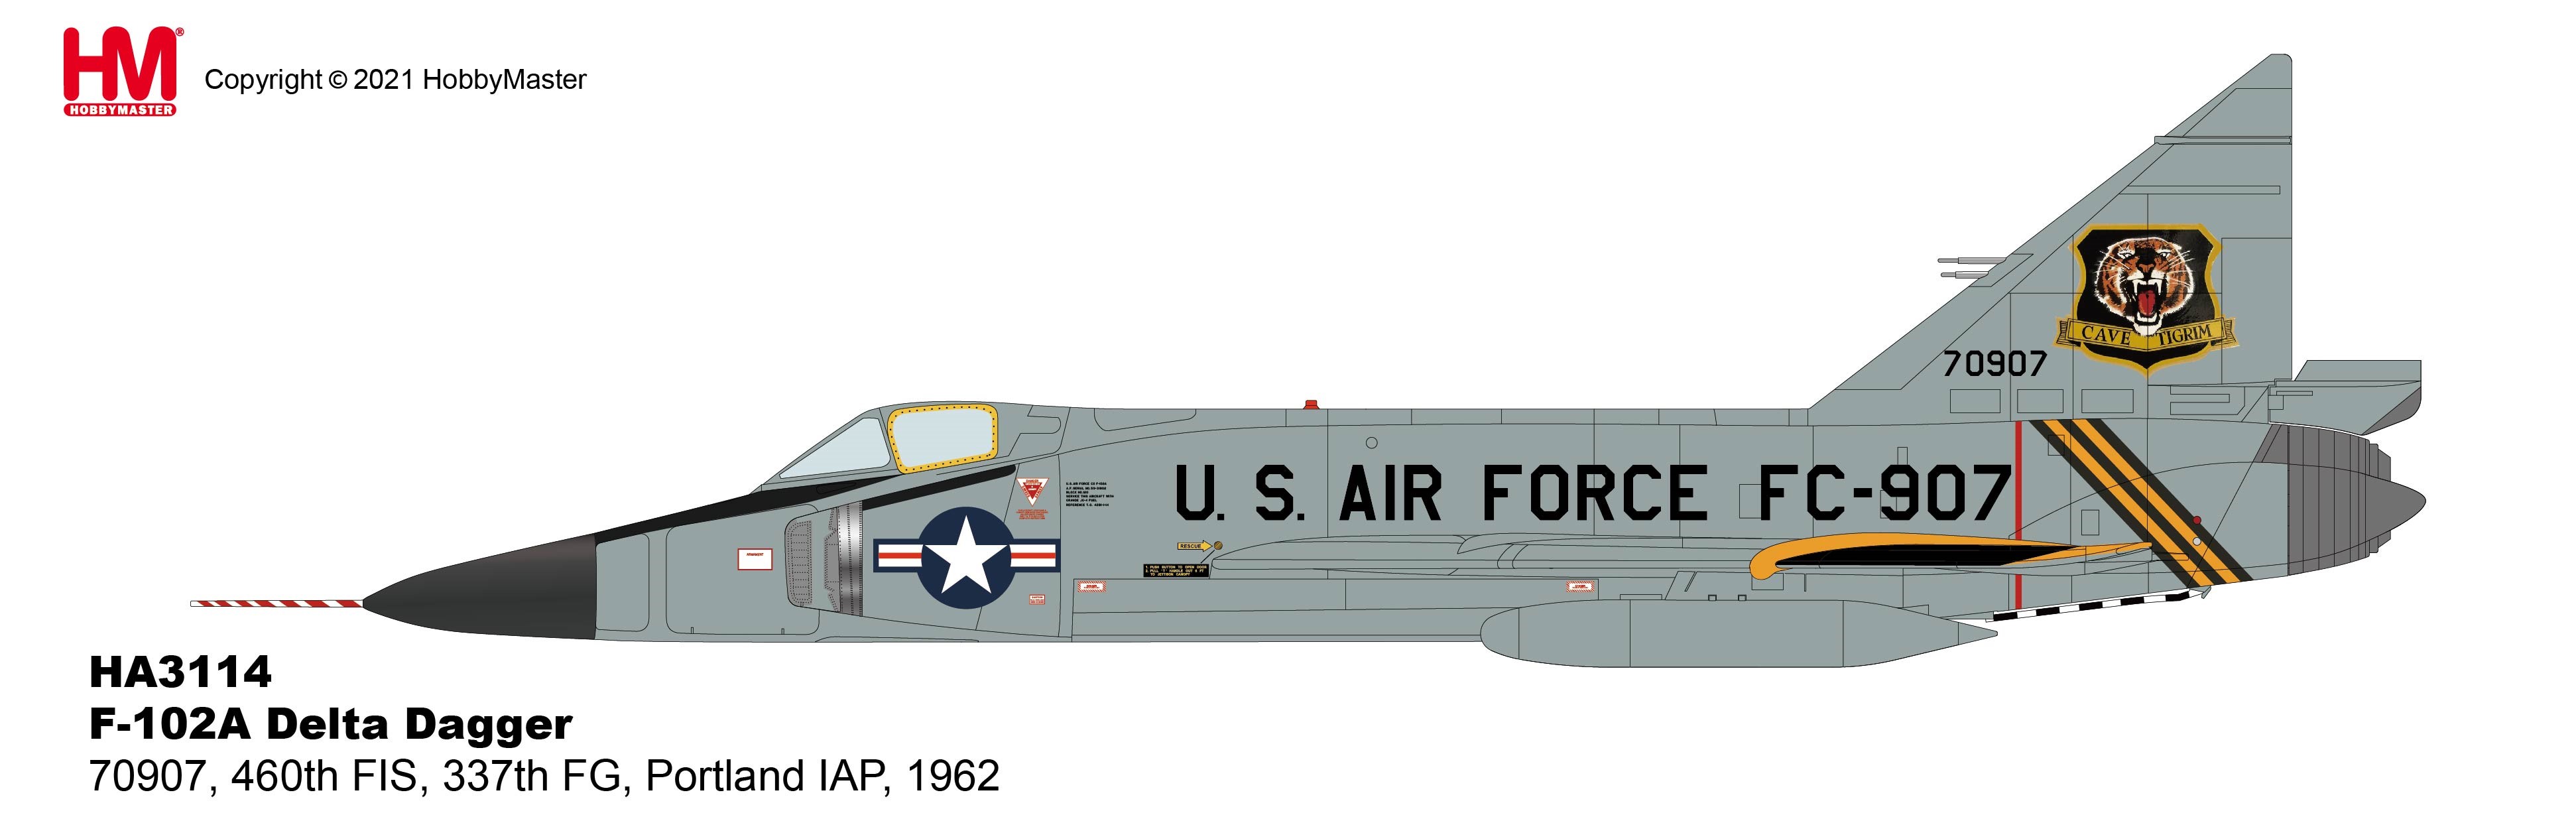 F-102A Delta Dagger 460th FIS, 337th FG, Portland IAP, 1962 (1:72)